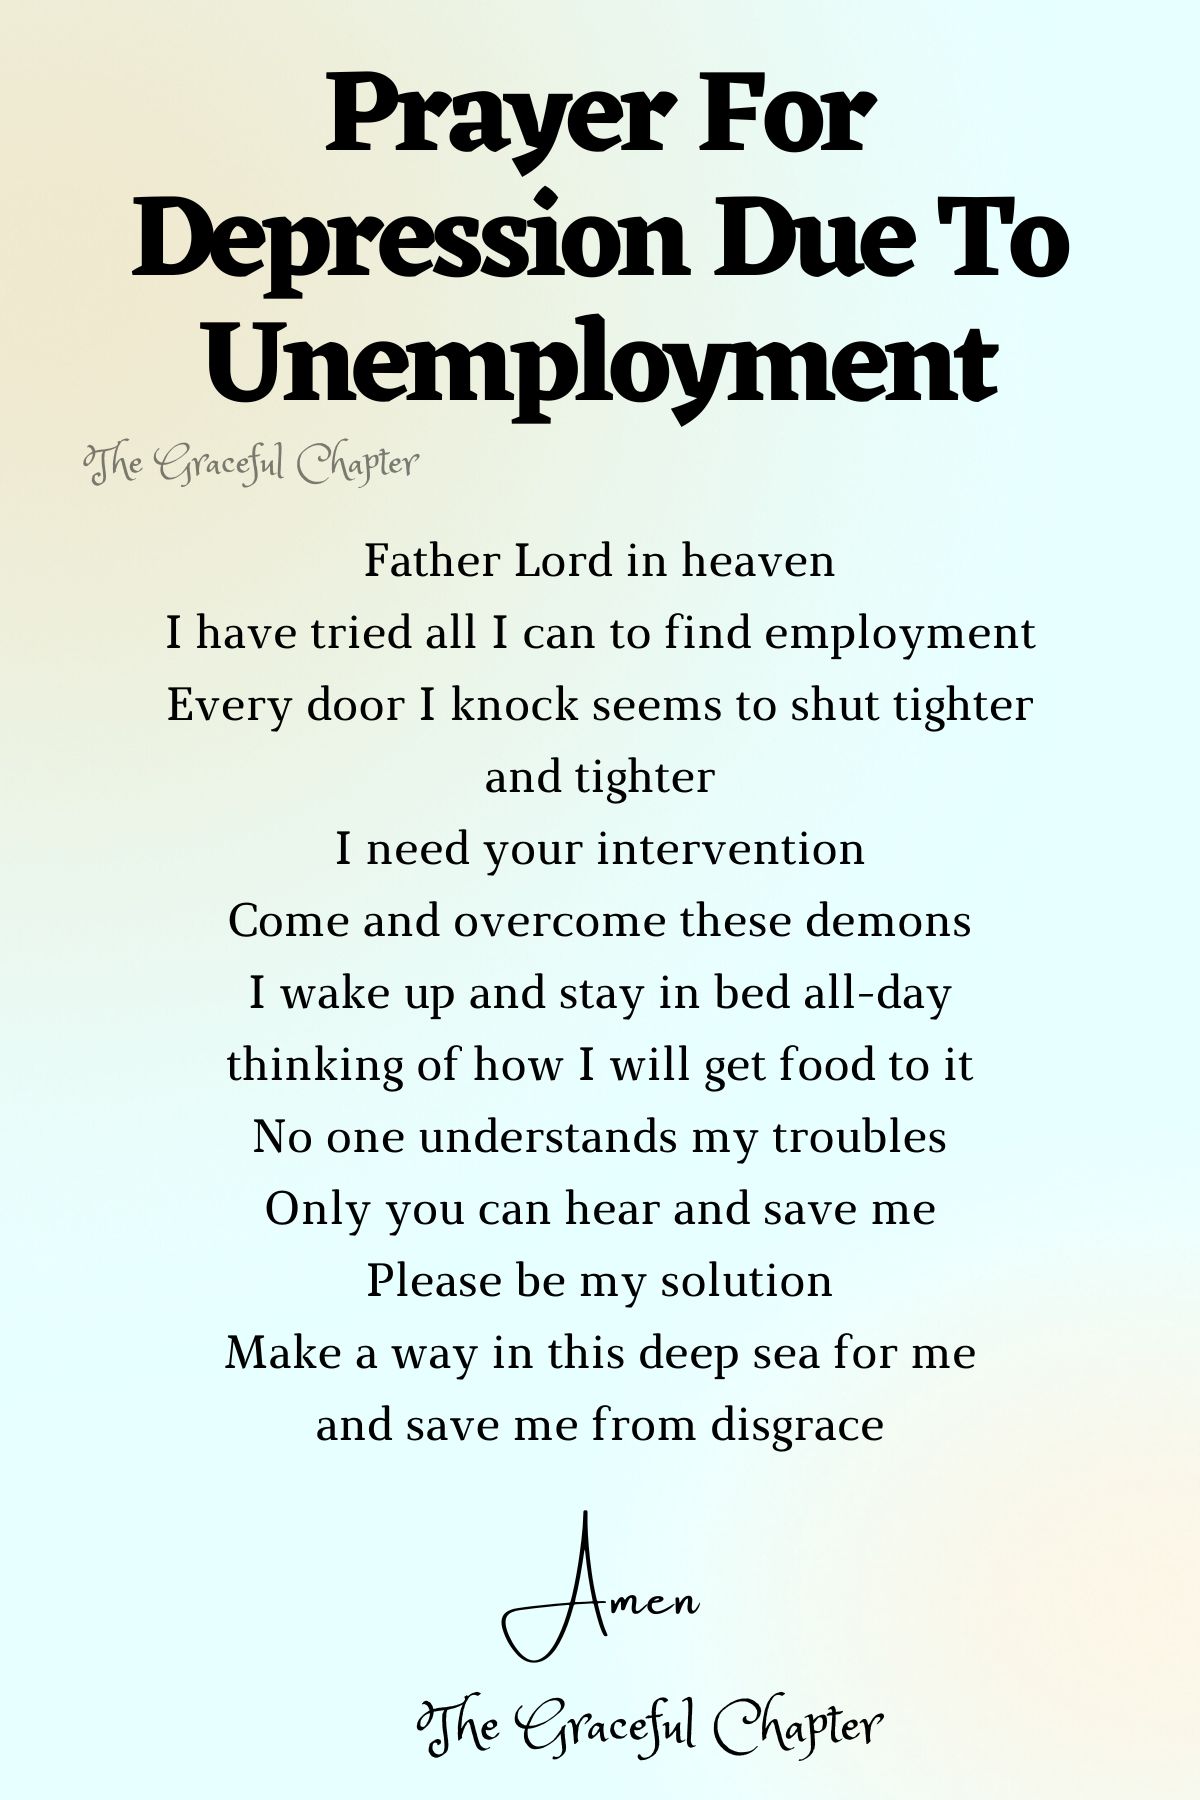 Prayer for depression due to unemployment